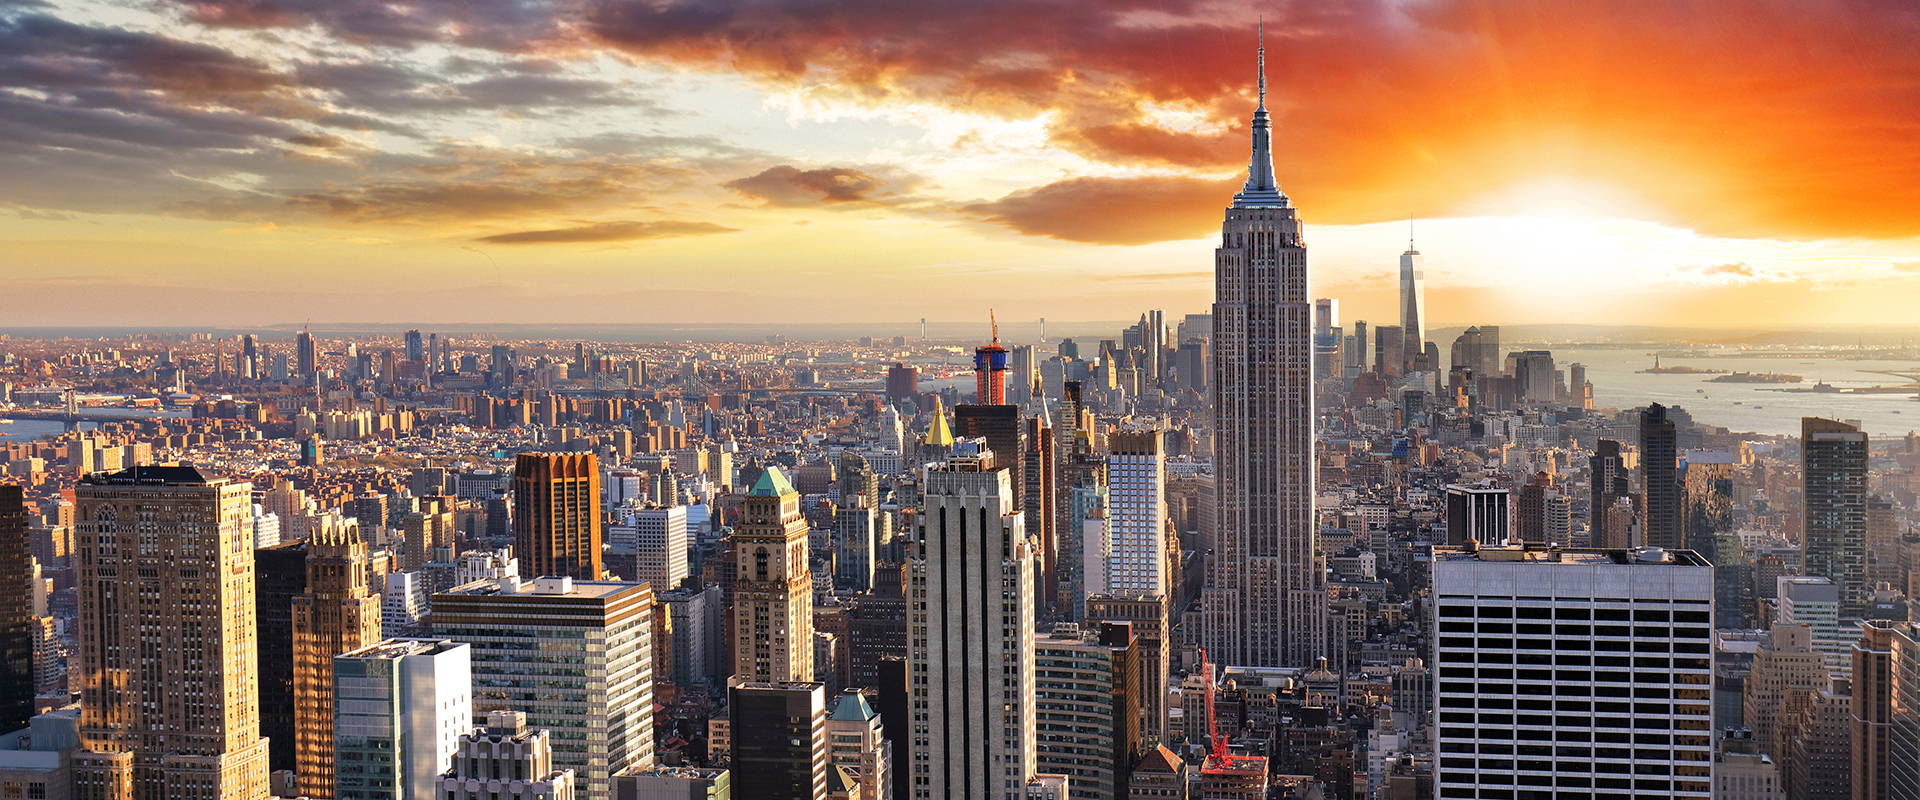 New York city skyline (POV from sky with orange sunrise in background